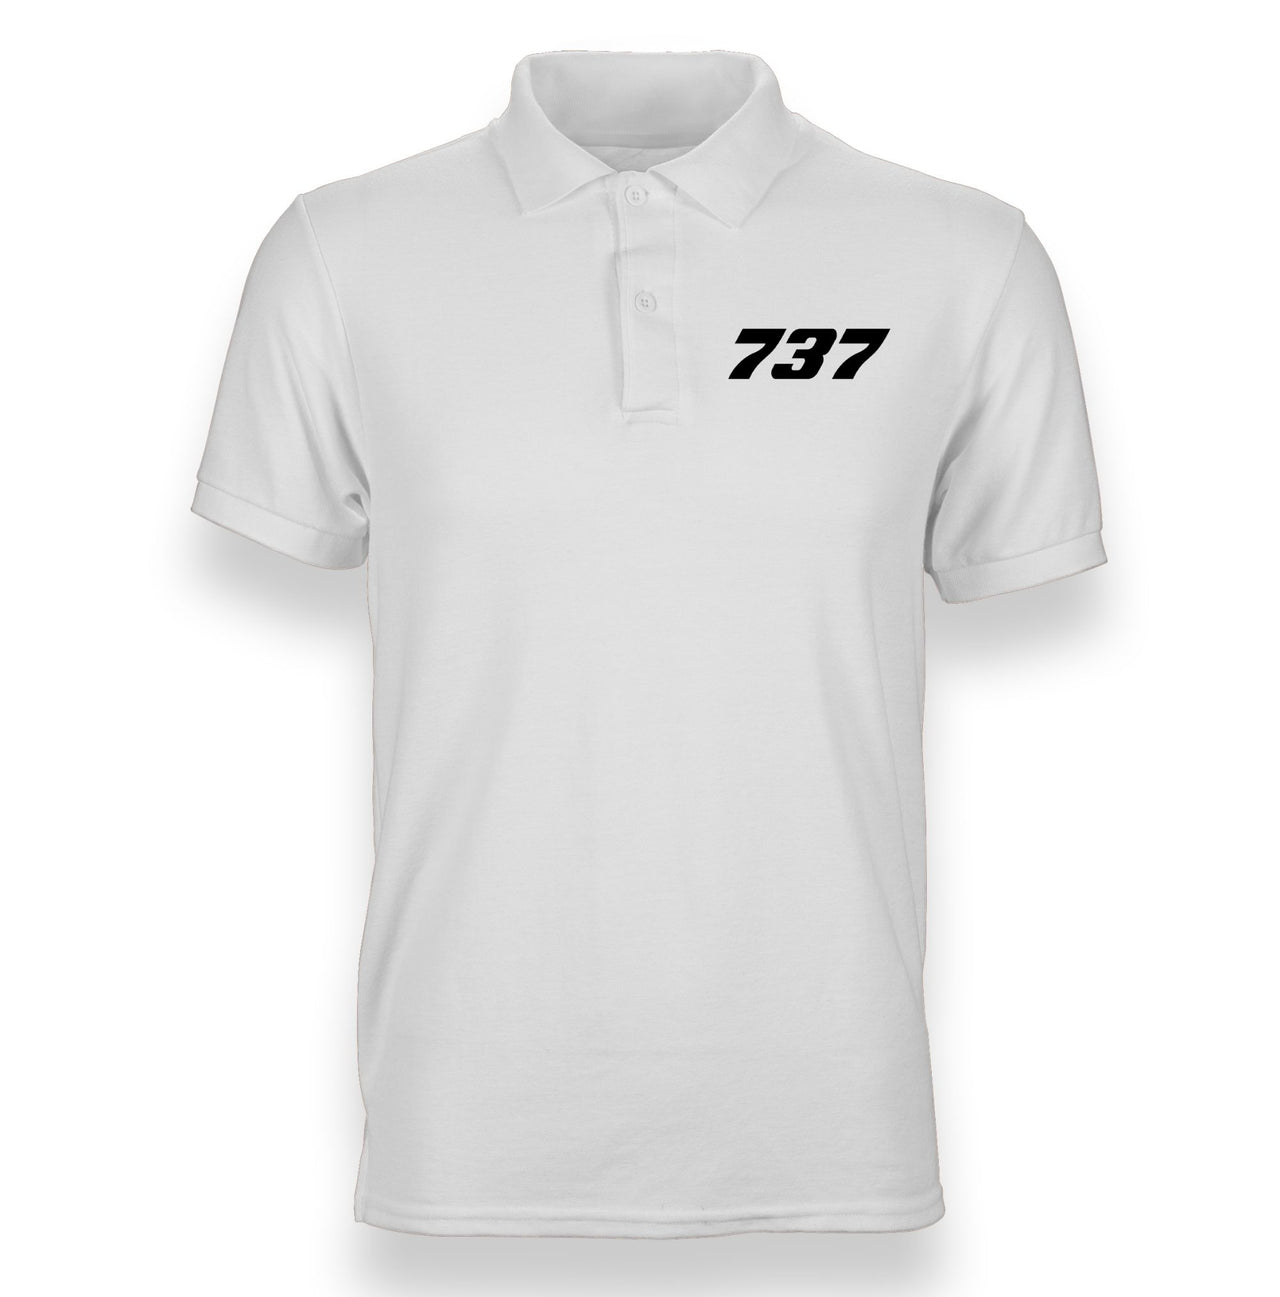 737 Flat Text Designed "WOMEN" Polo T-Shirts